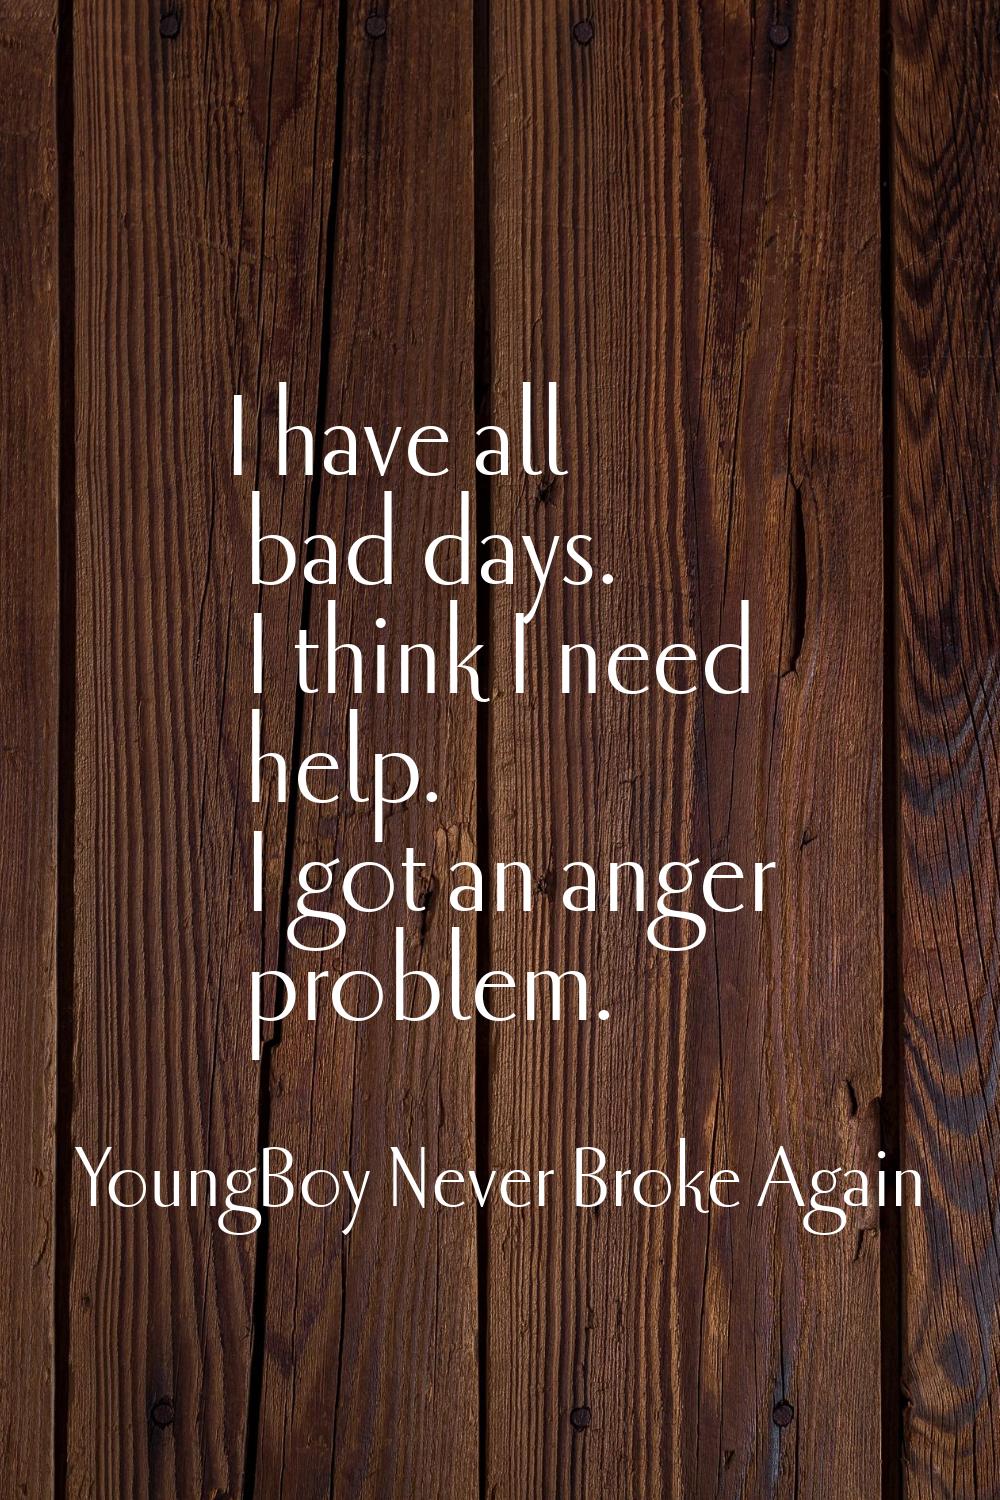 I have all bad days. I think I need help. I got an anger problem.